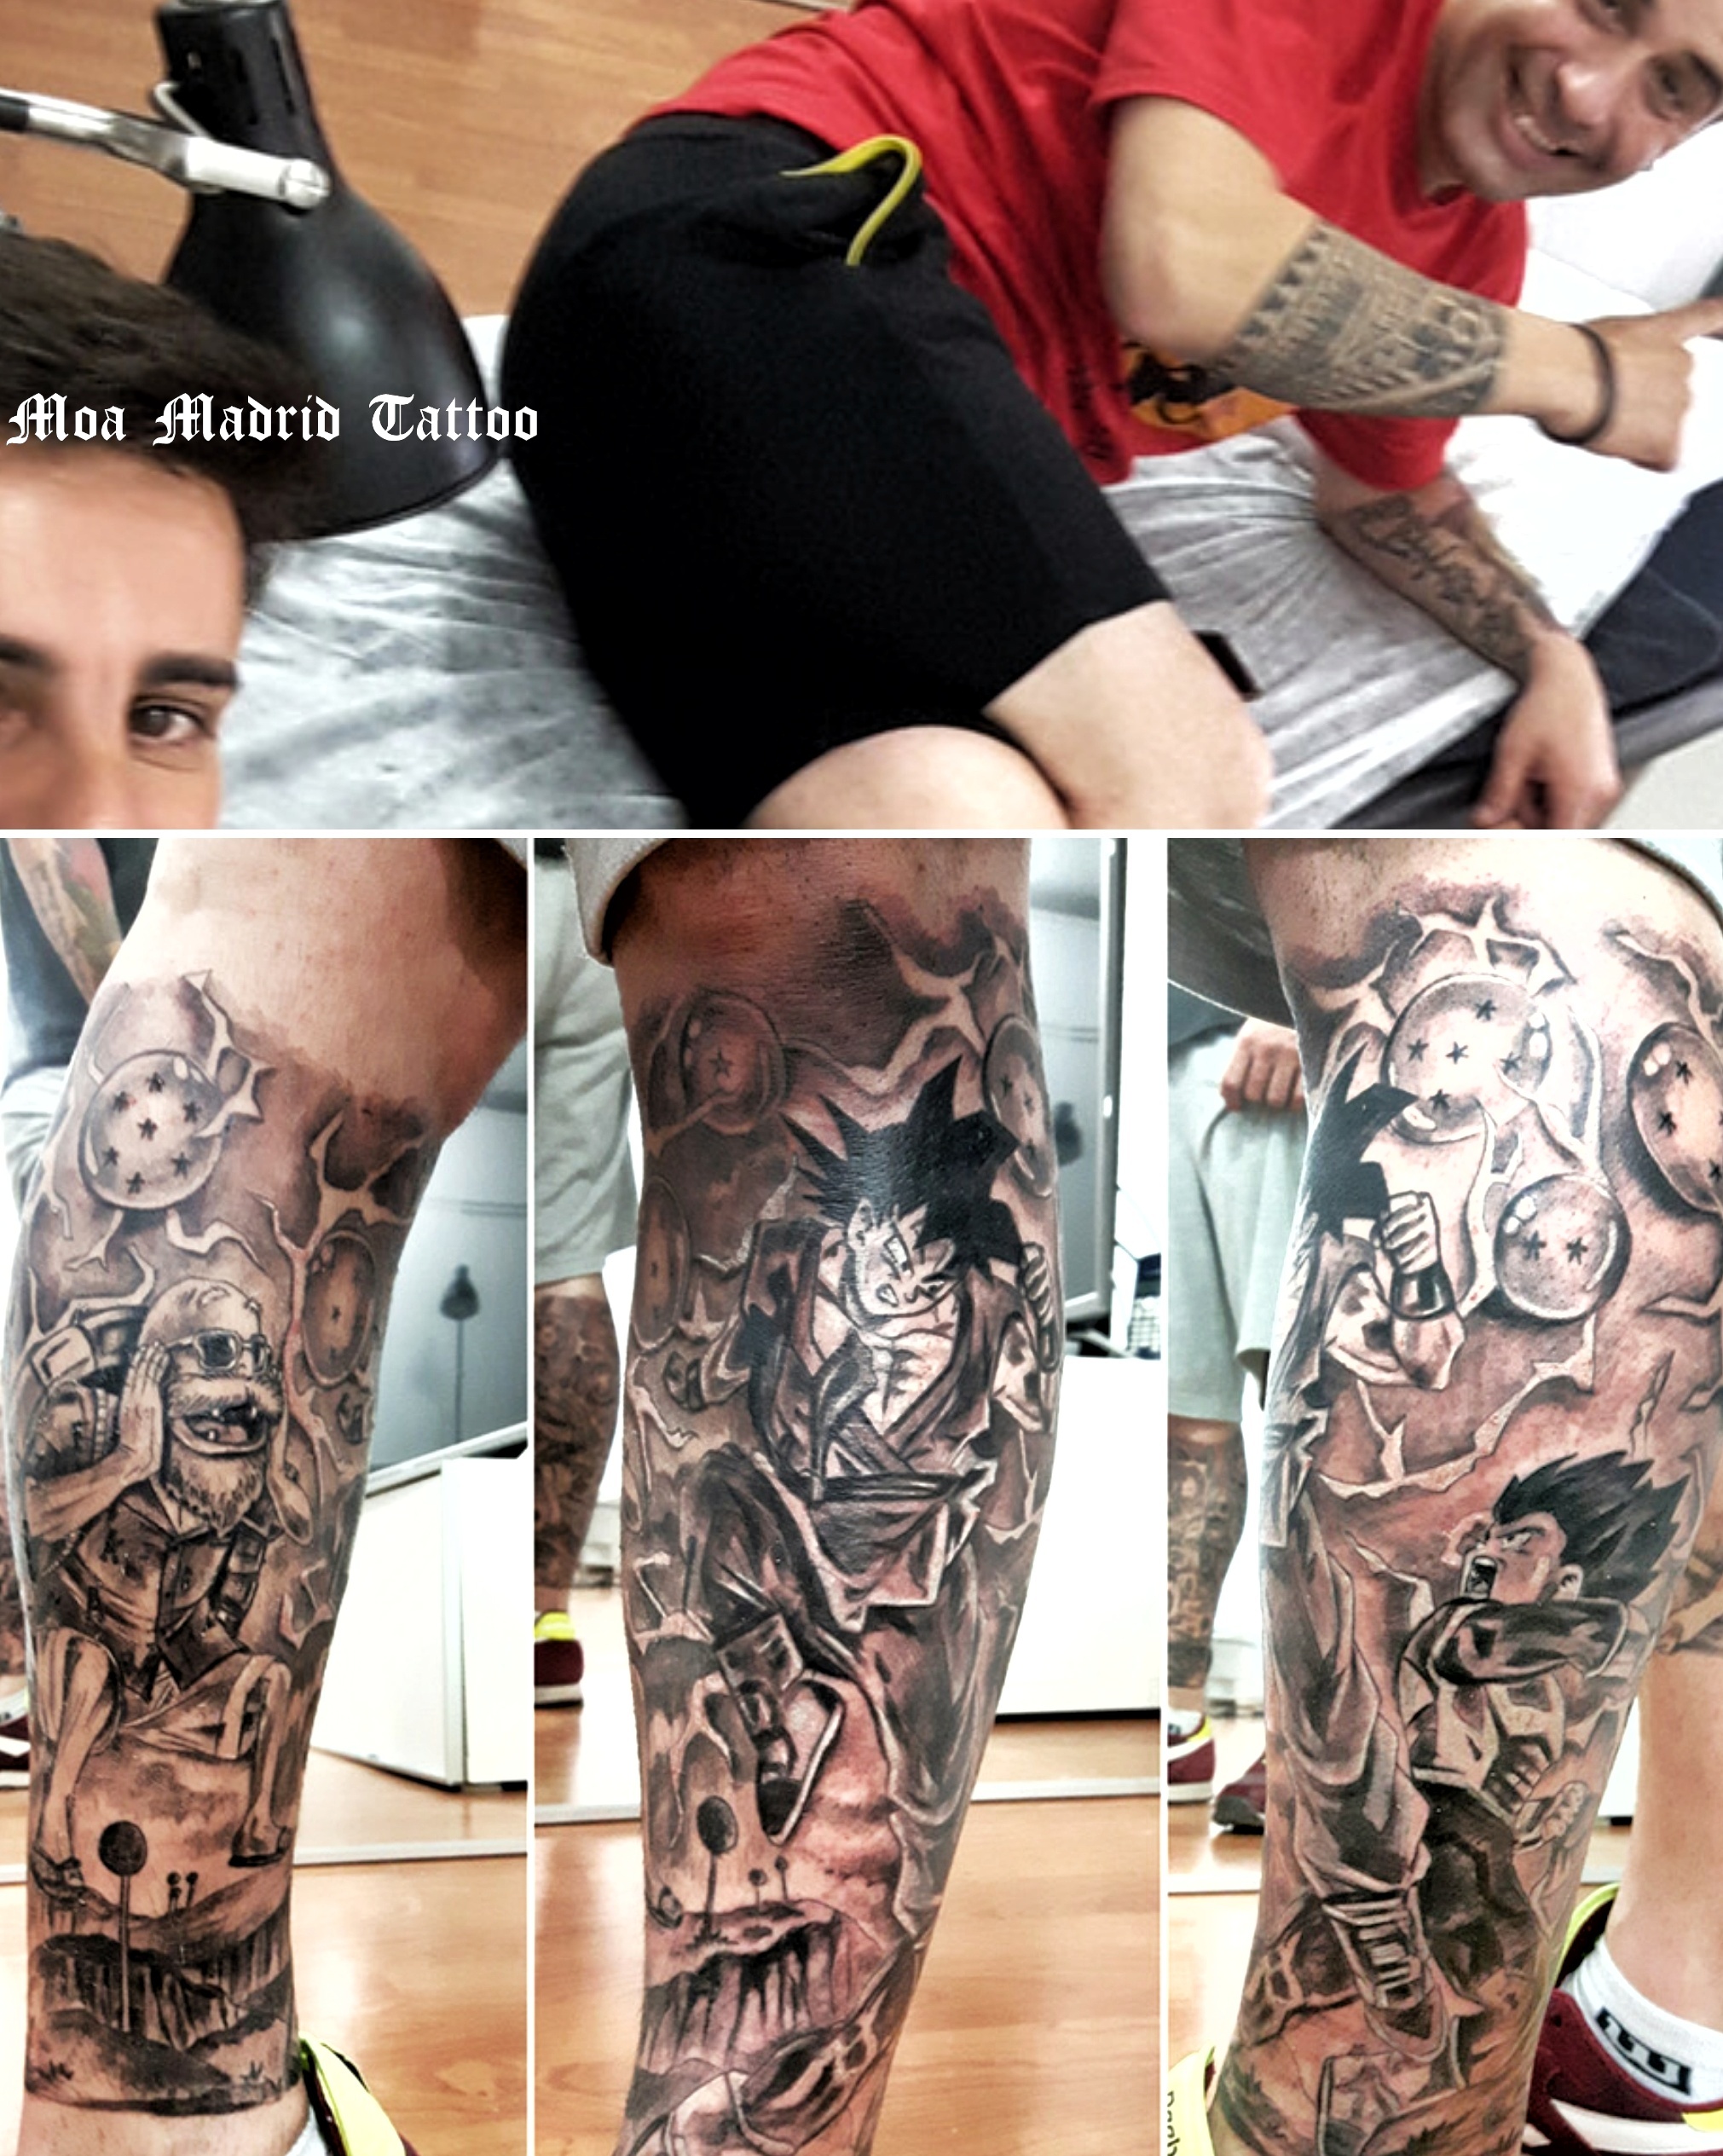 Tatuaje Bola de dragón rodeando la pierna | Moa Madrid Tattoo